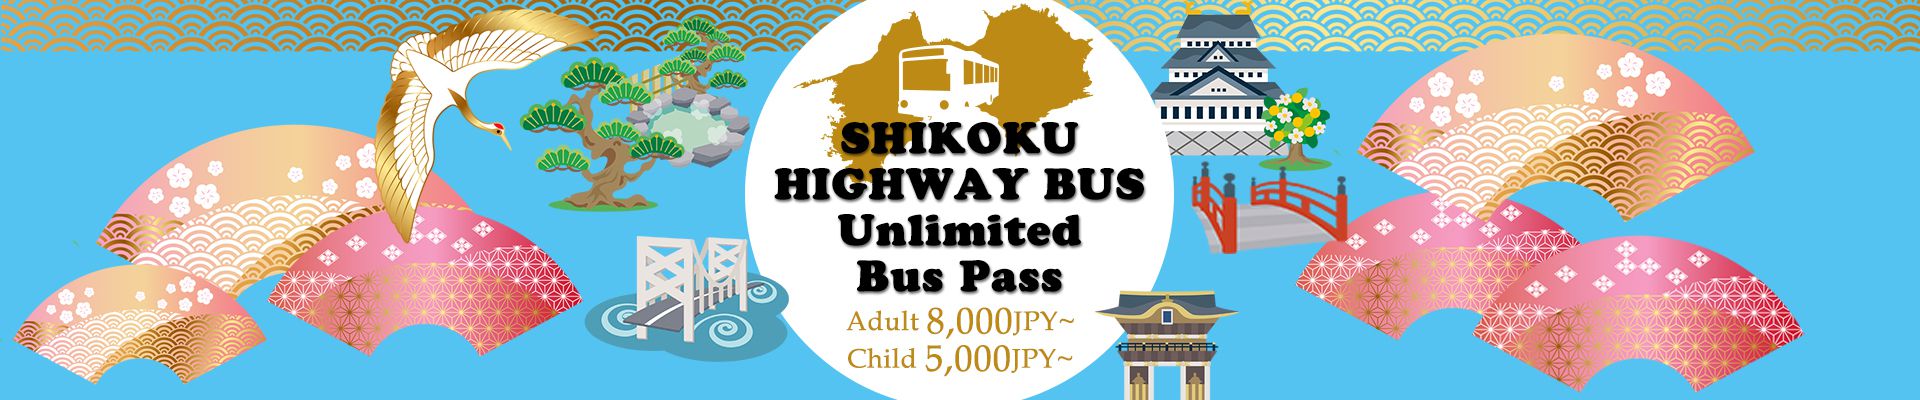 SHIKOKU HIGHWAY BUS Unlimited Bus Pass